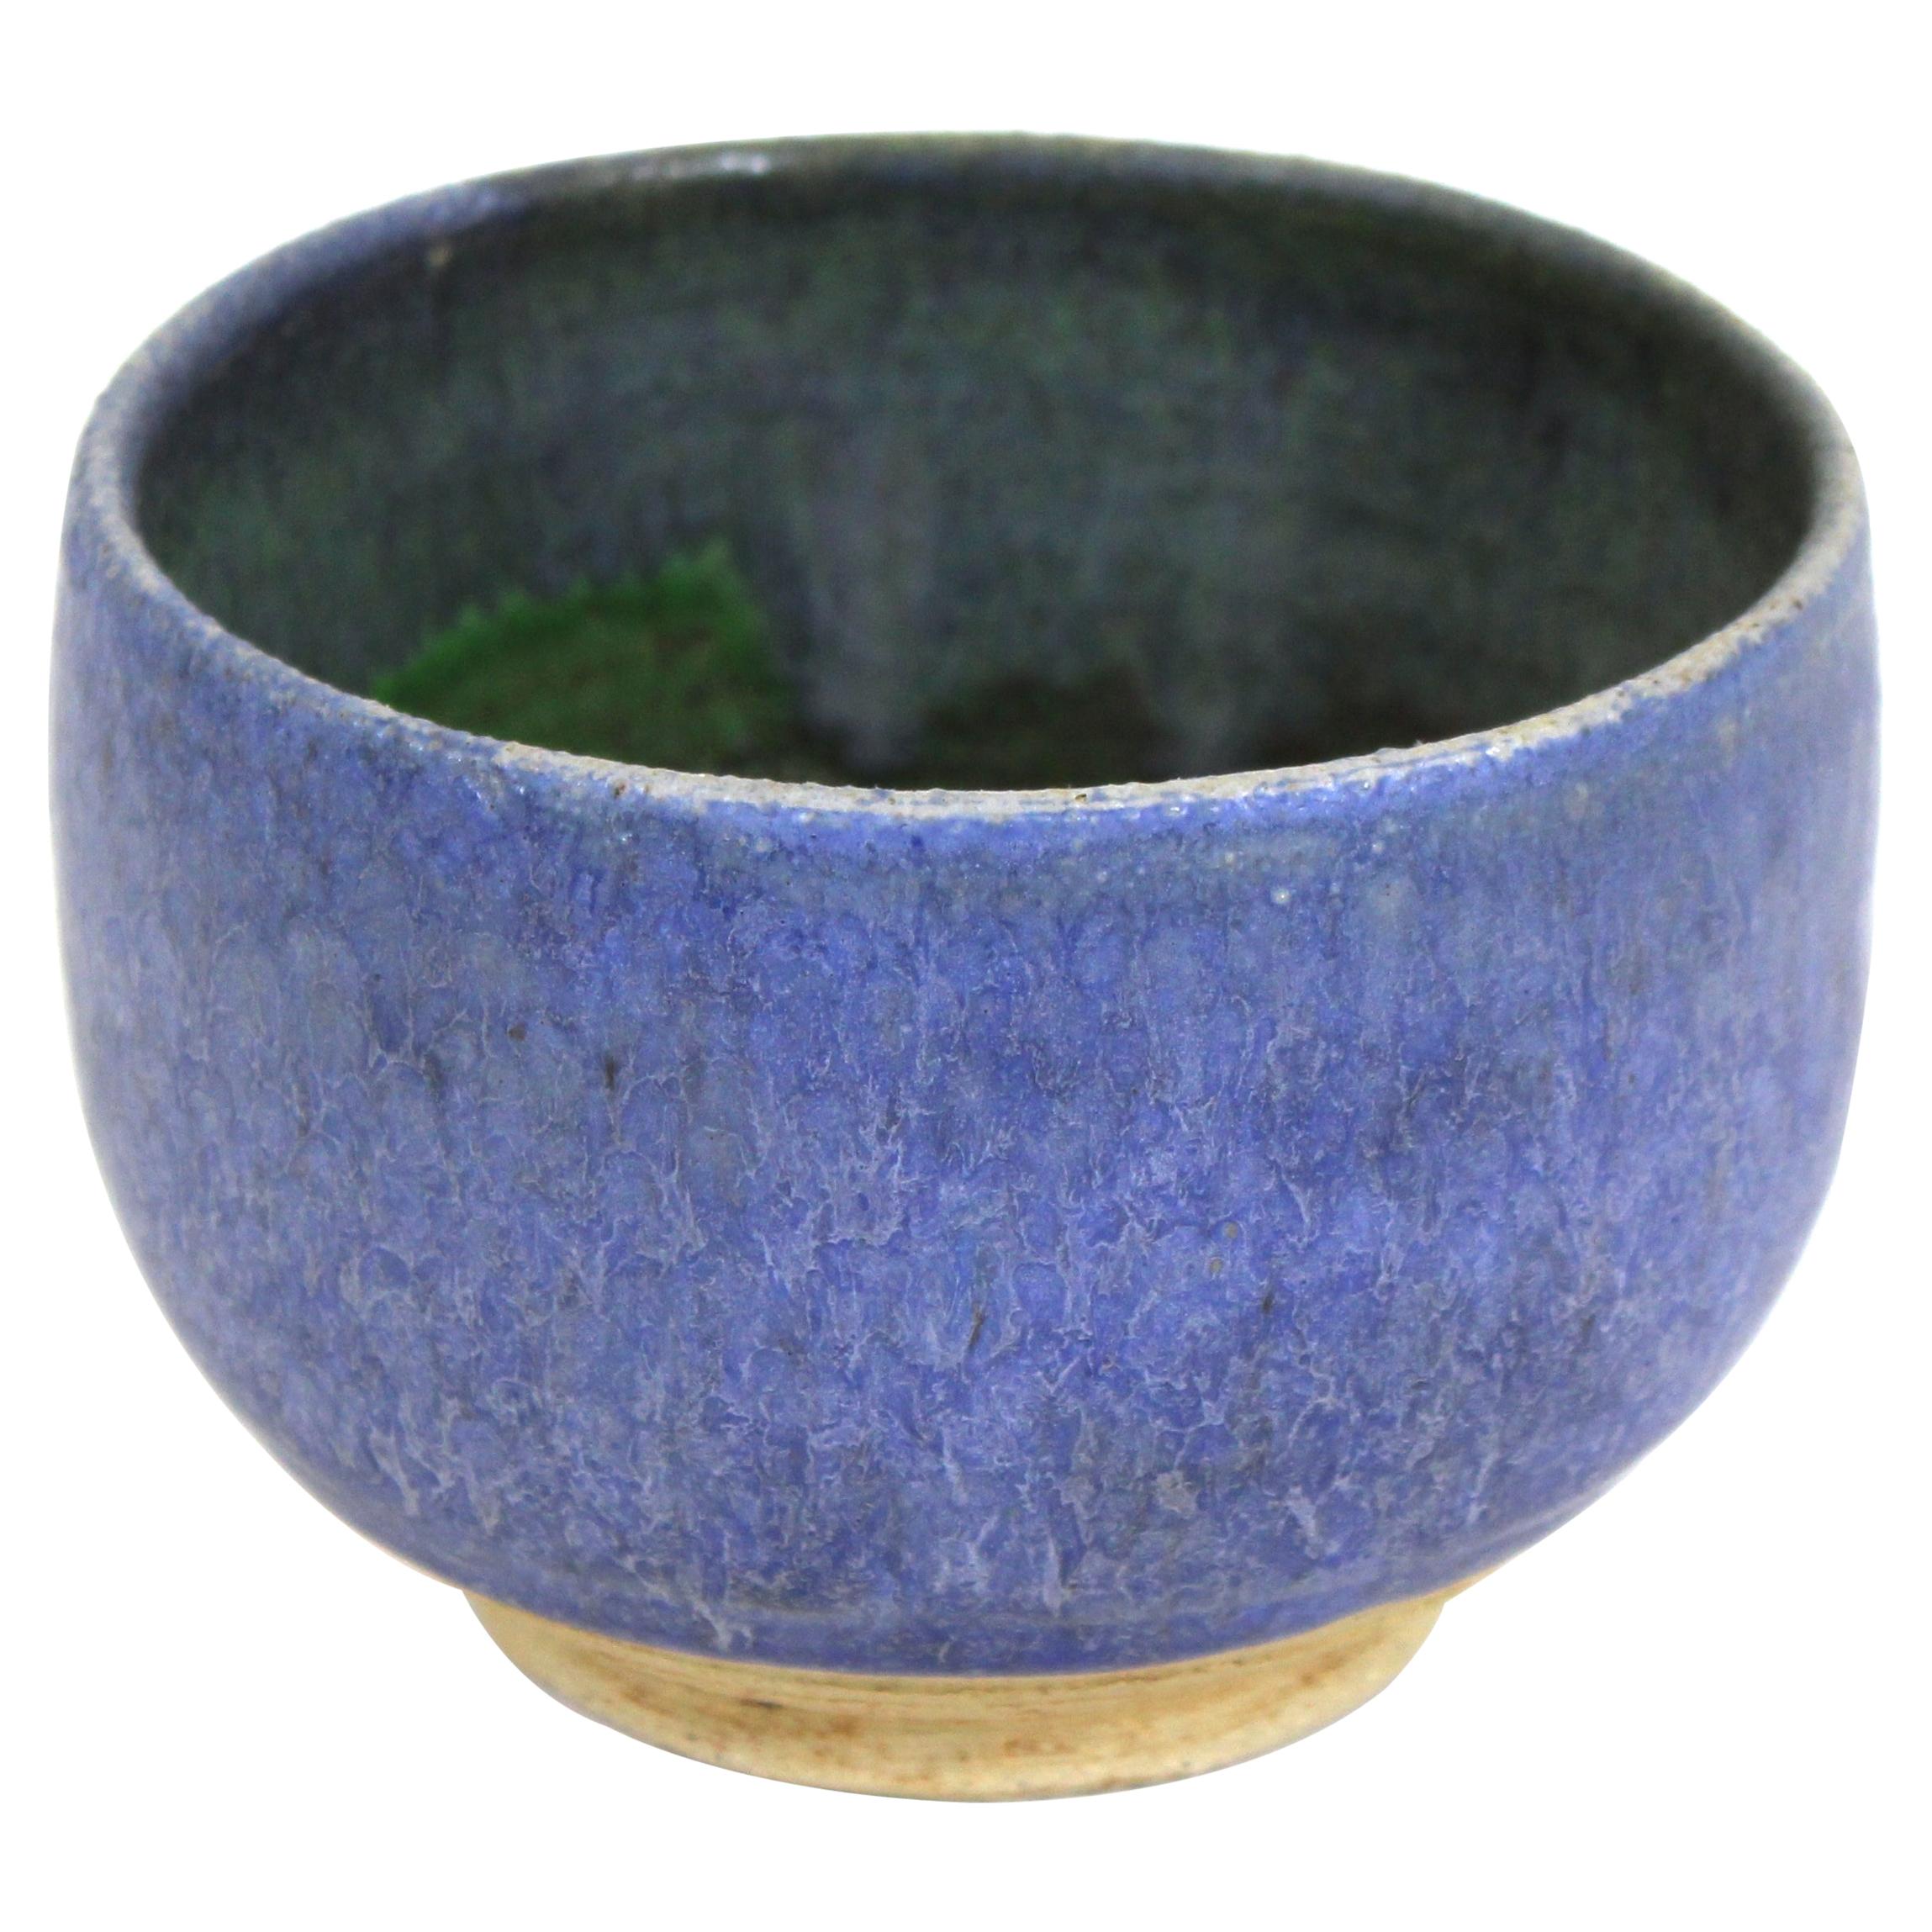 Mid-Century Modern Blue Stoneware Pottery Bowl